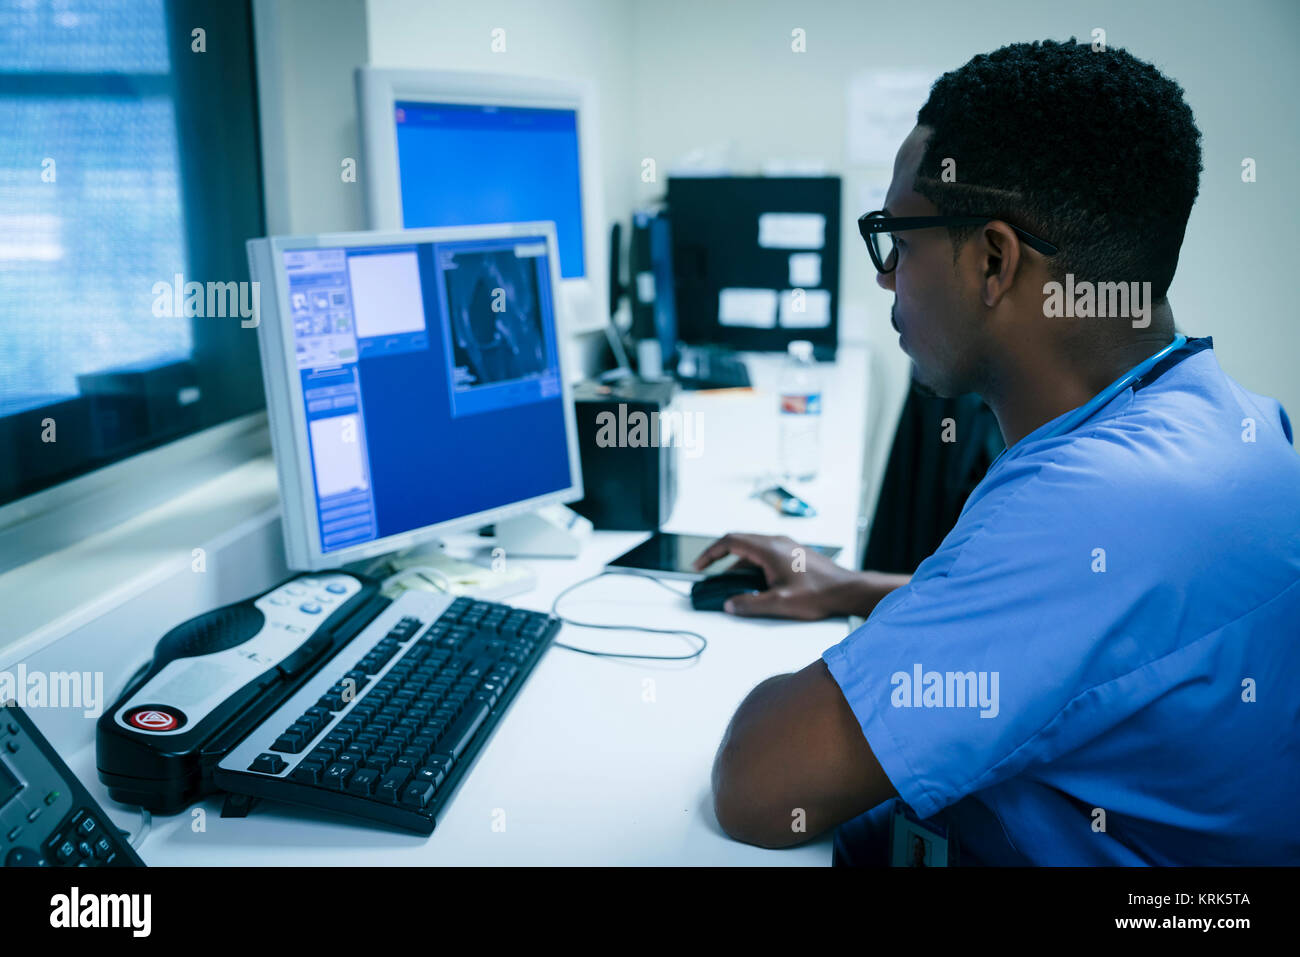 Black nurse using computer Stock Photo